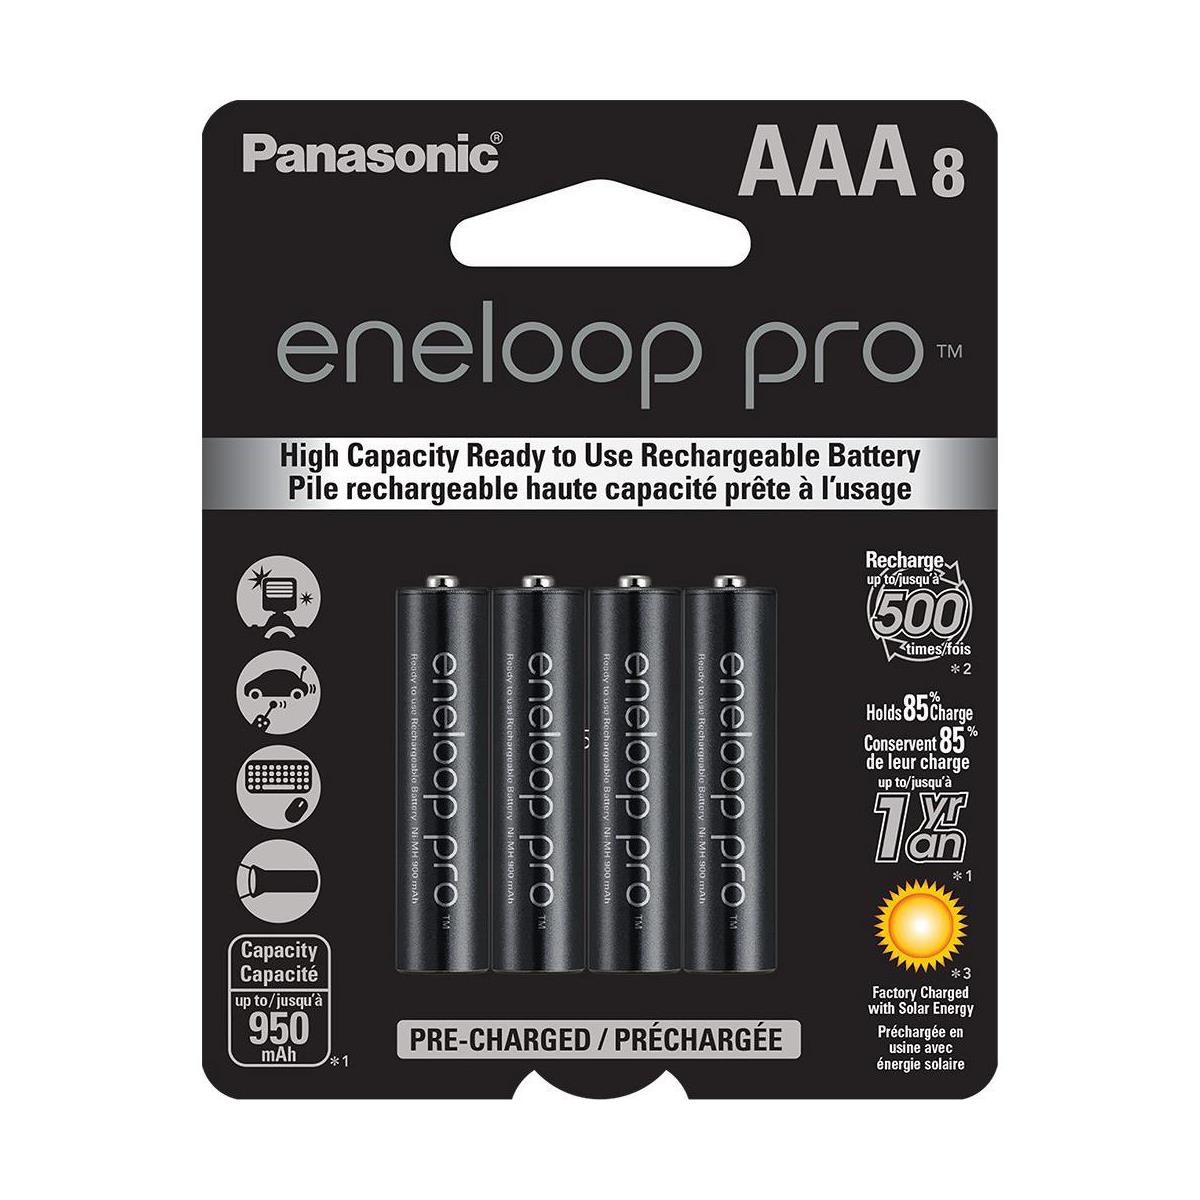 

Panasonic Eneloop Pro AAA 950mAh Rechargeable NiMH Battery, 8-Pack